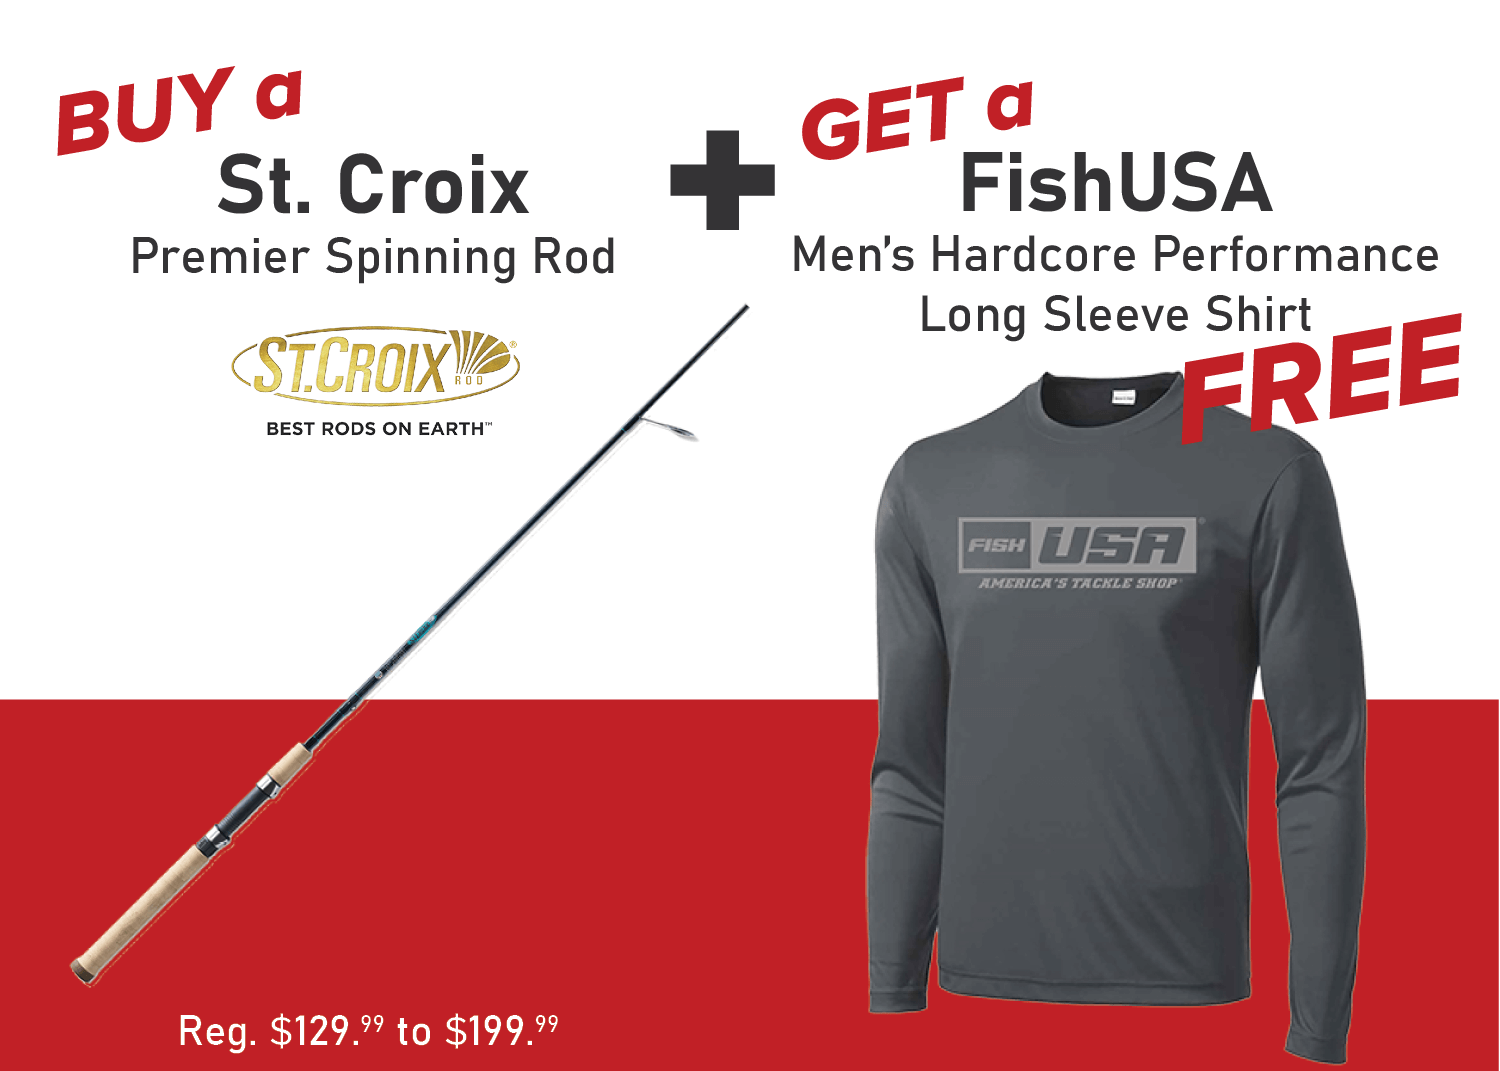 Buy a St. Croix Premier Spinning Rod & Get a FREE FishUSA Men's Hardcore Performance Long Sleeve Shirt